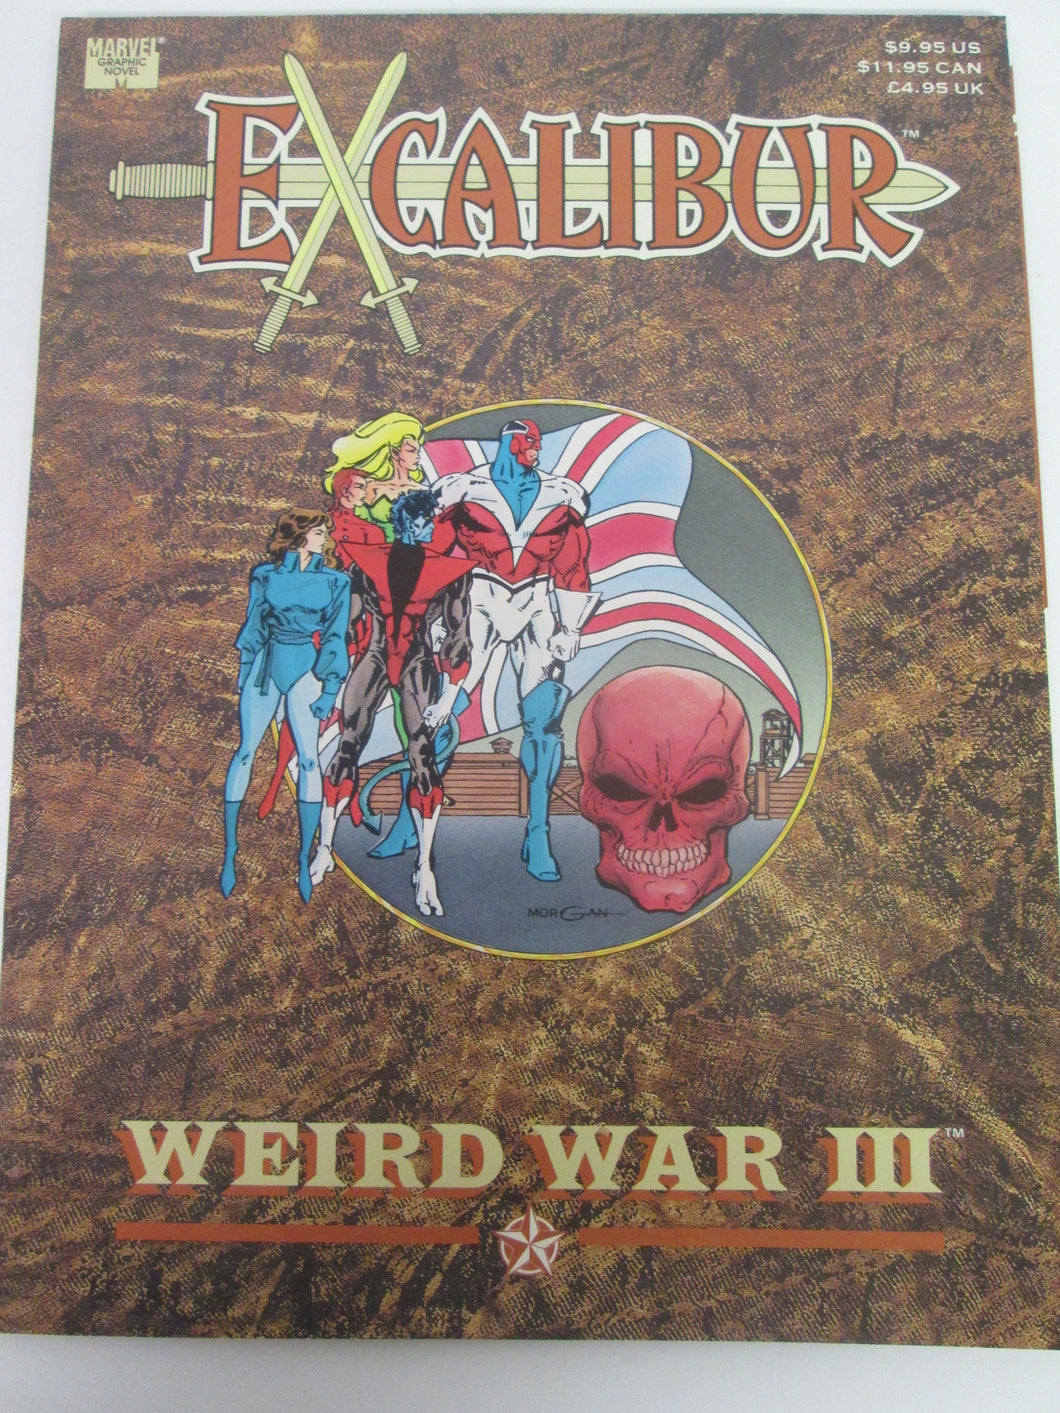 Excalibur Weird War III Marvel Graphic Novel 1990 PB